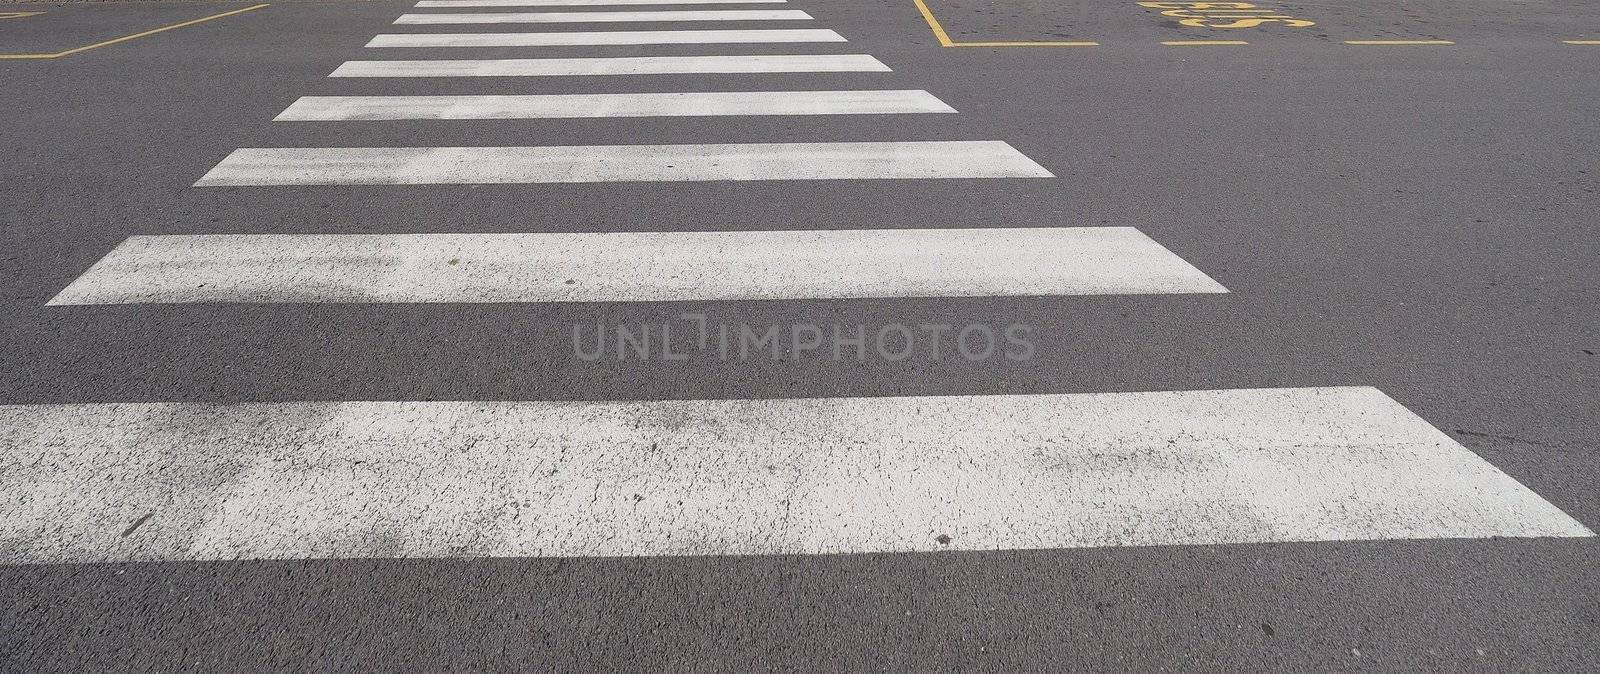 zebra crossing sign by claudiodivizia